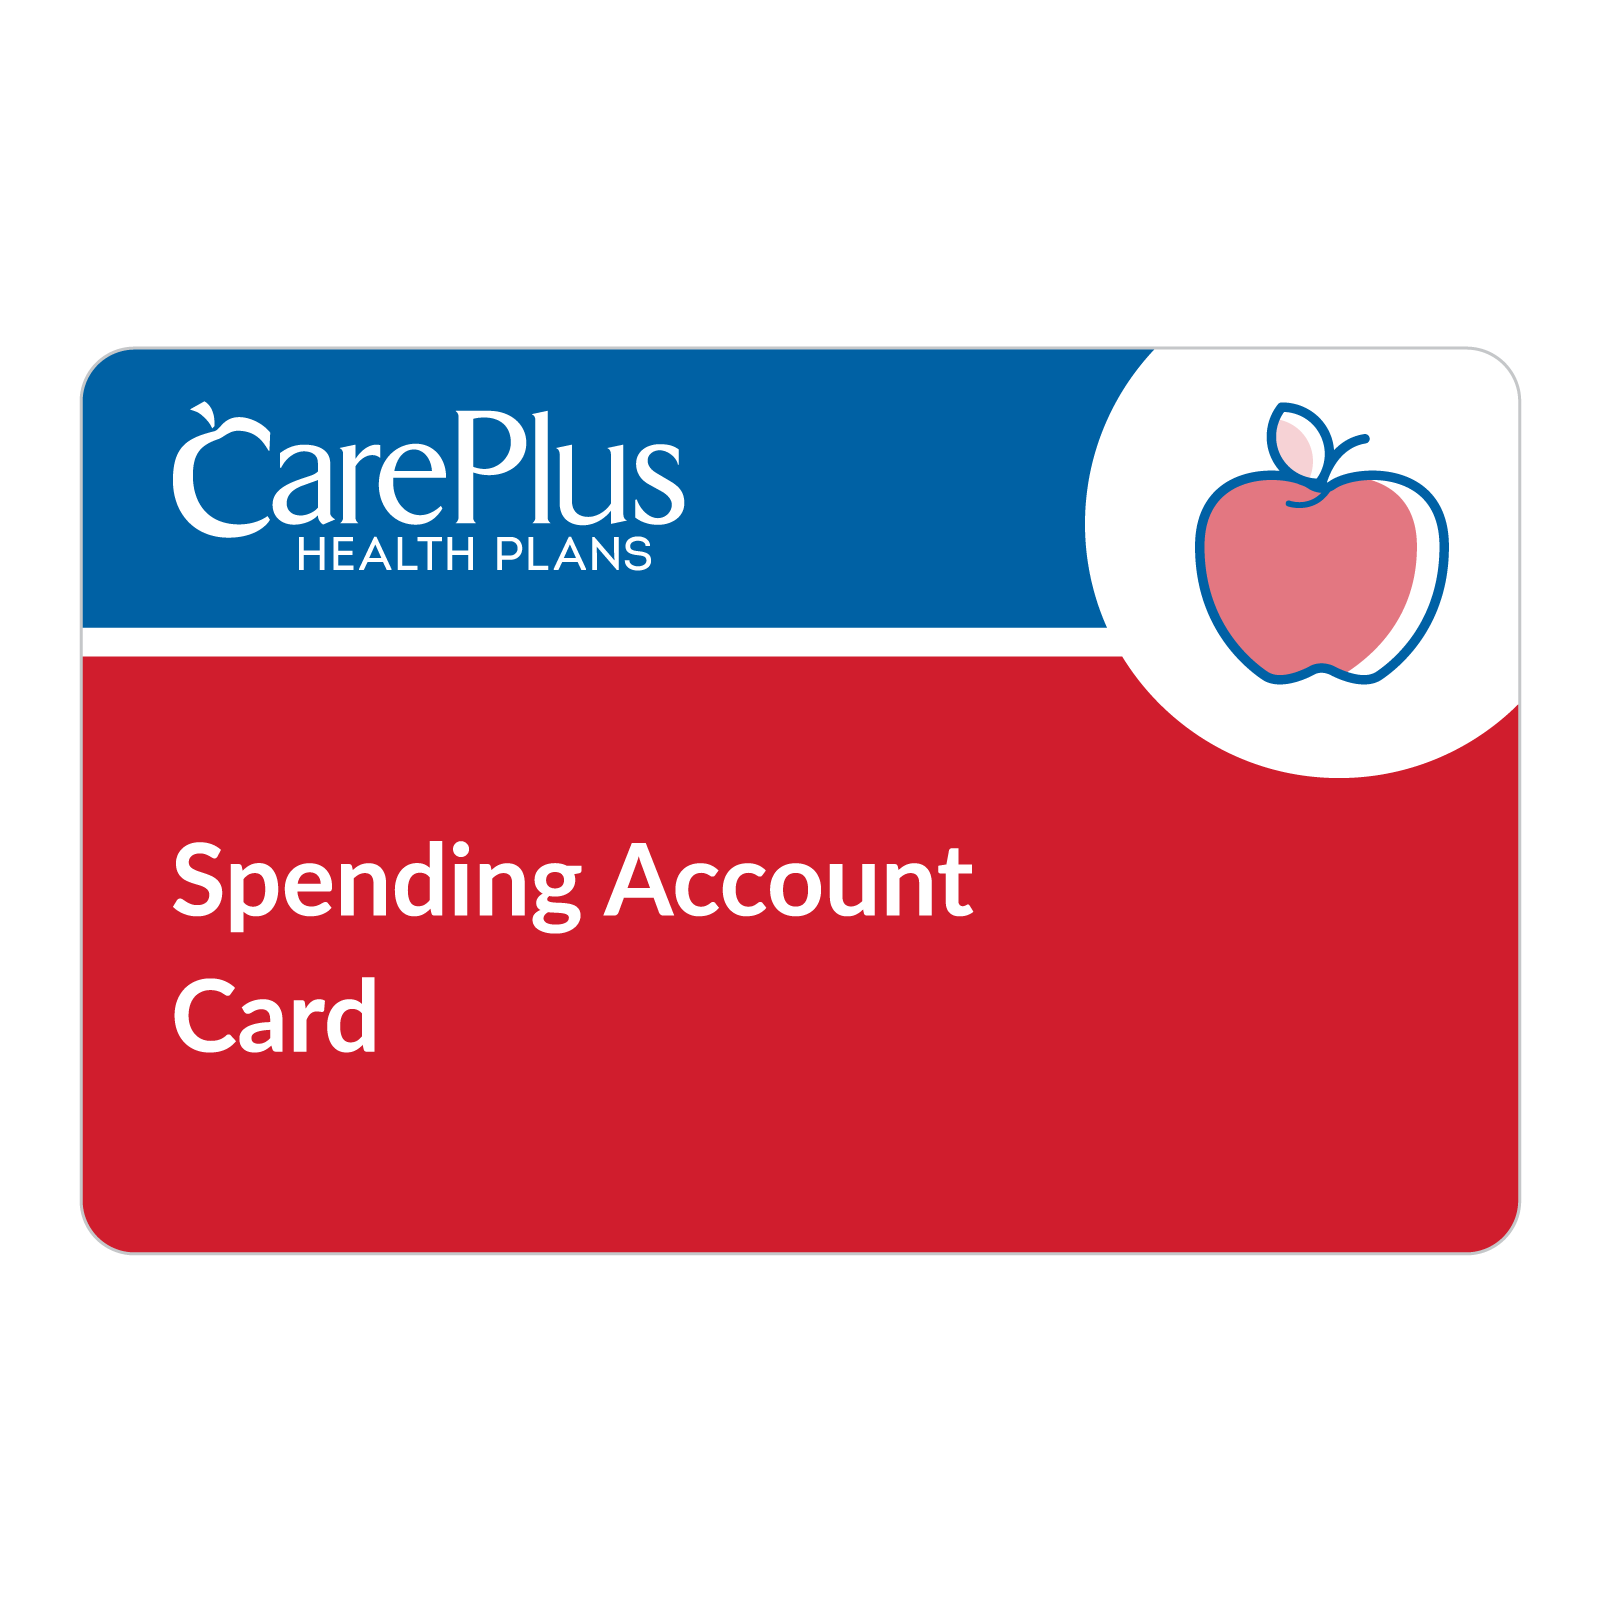 Sample CarePlus Spending Account Card.